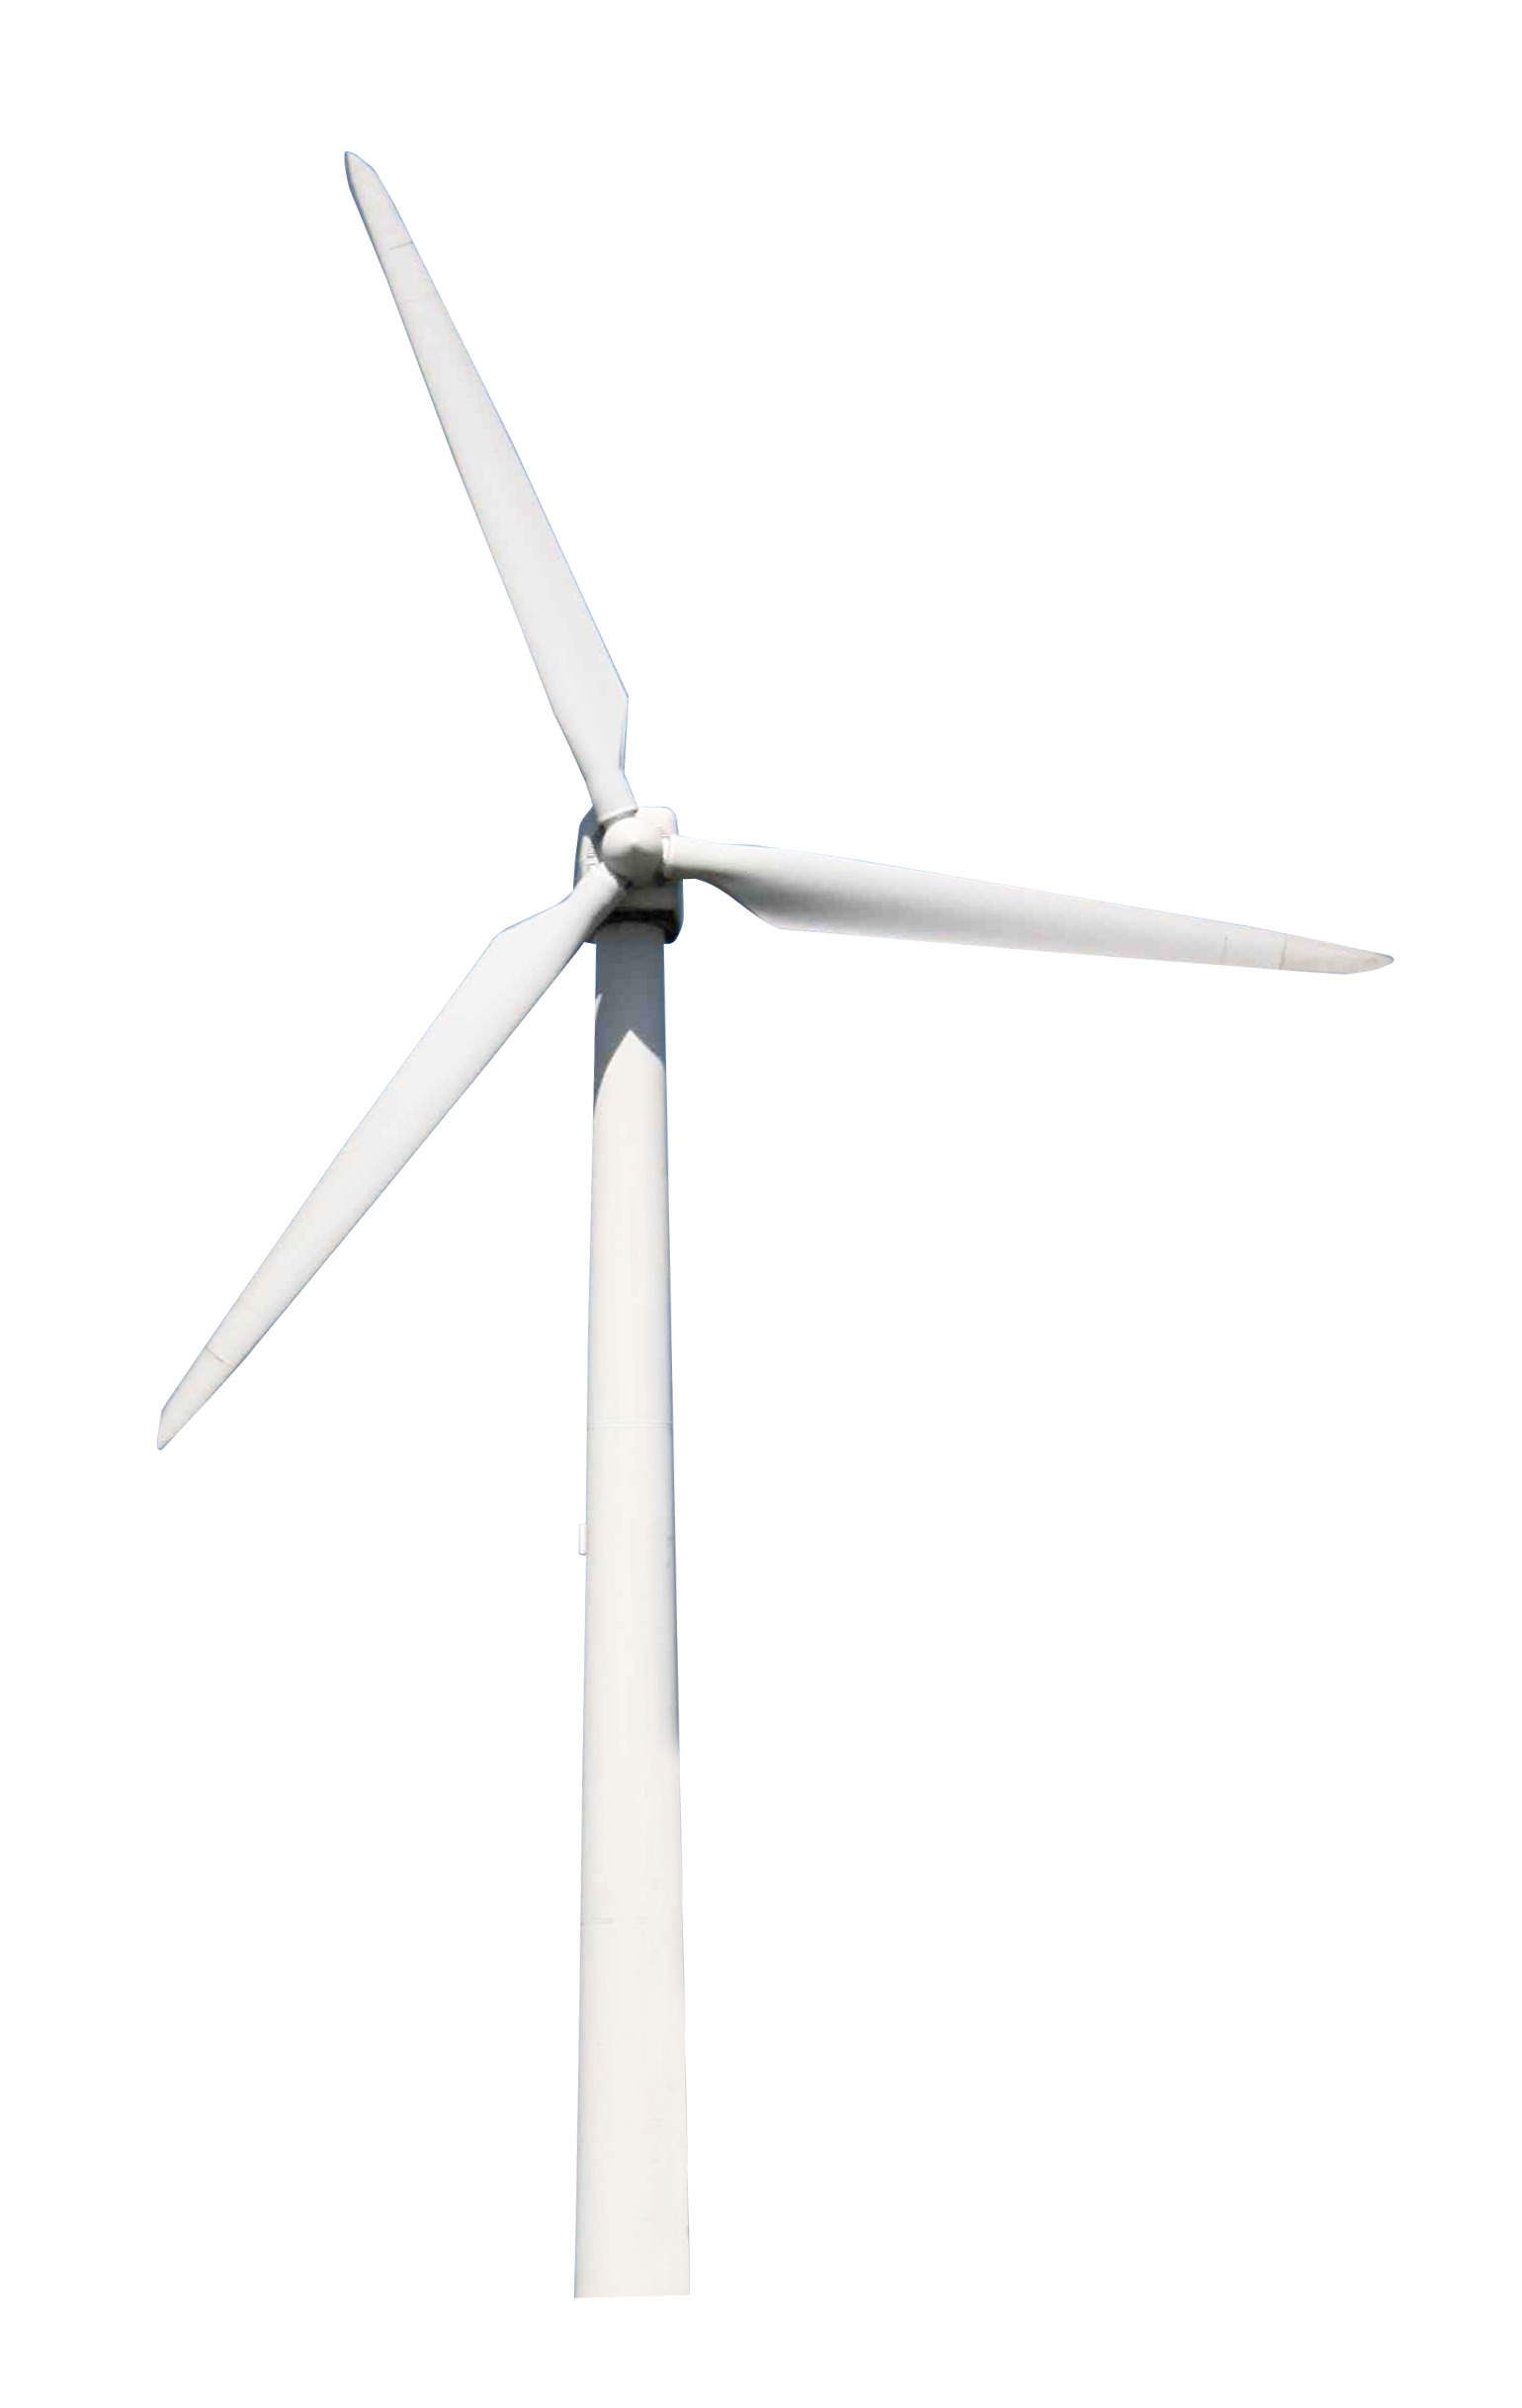 Modern Wind Turbine Against Clear Sky